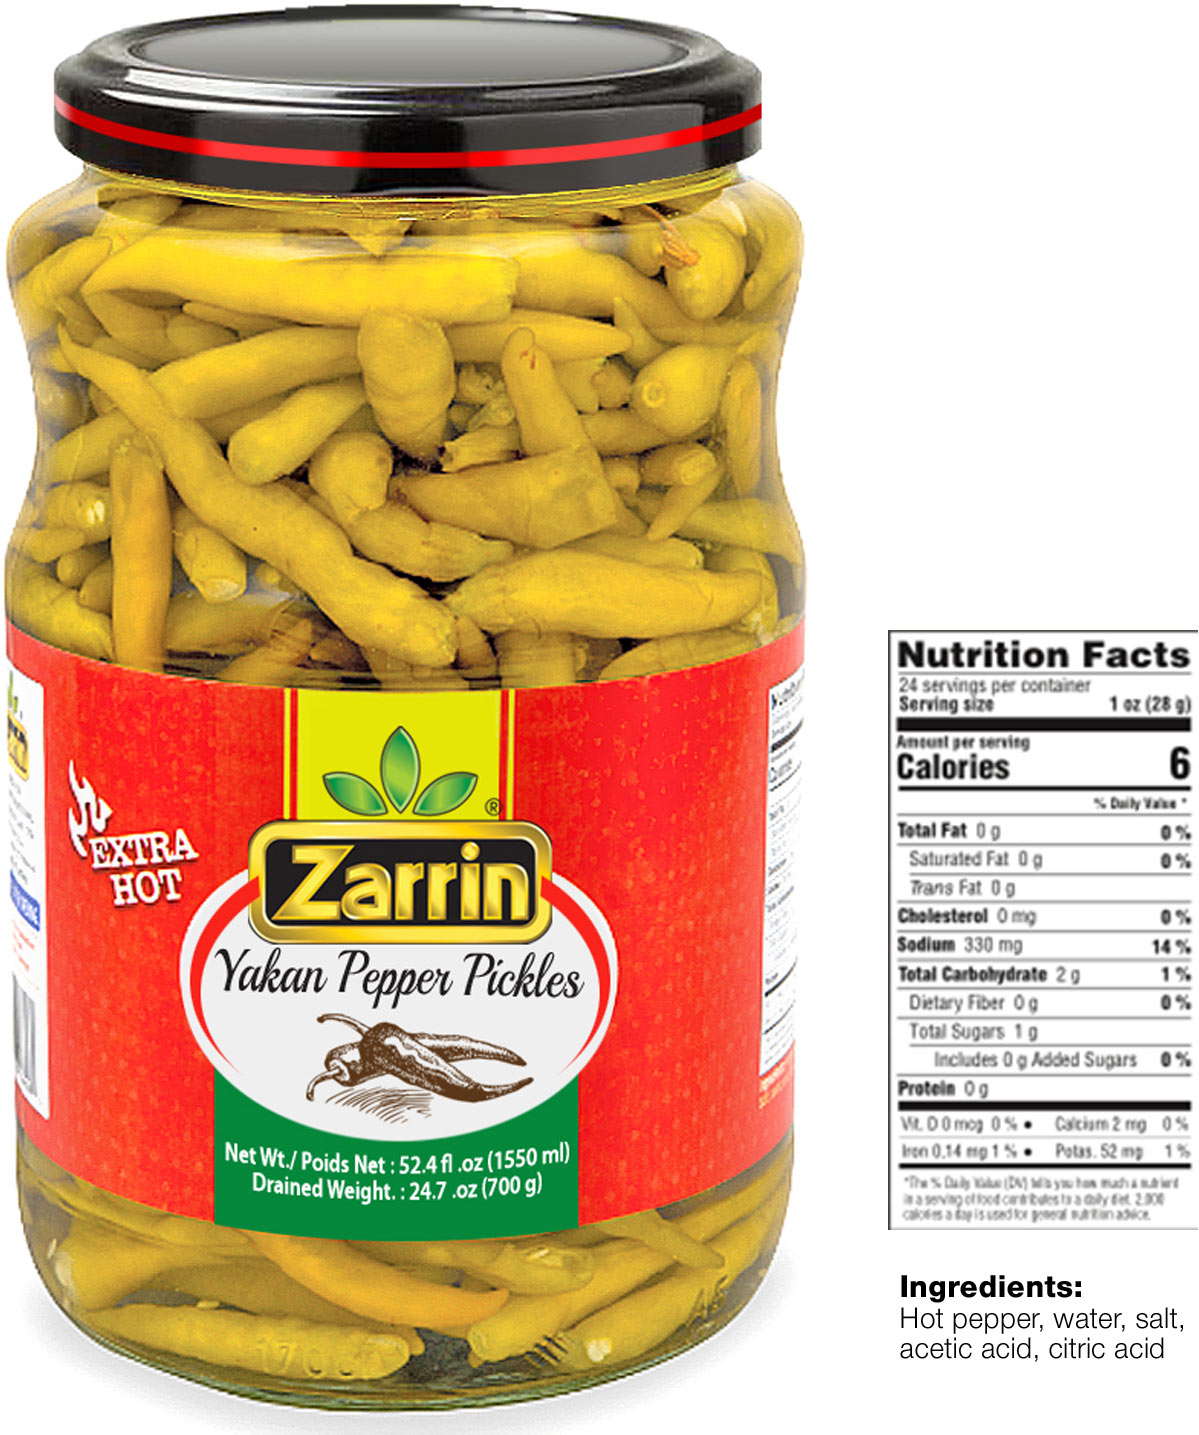 Zarrin hot yakan pepper pickles in 52.4 oz glass jar.